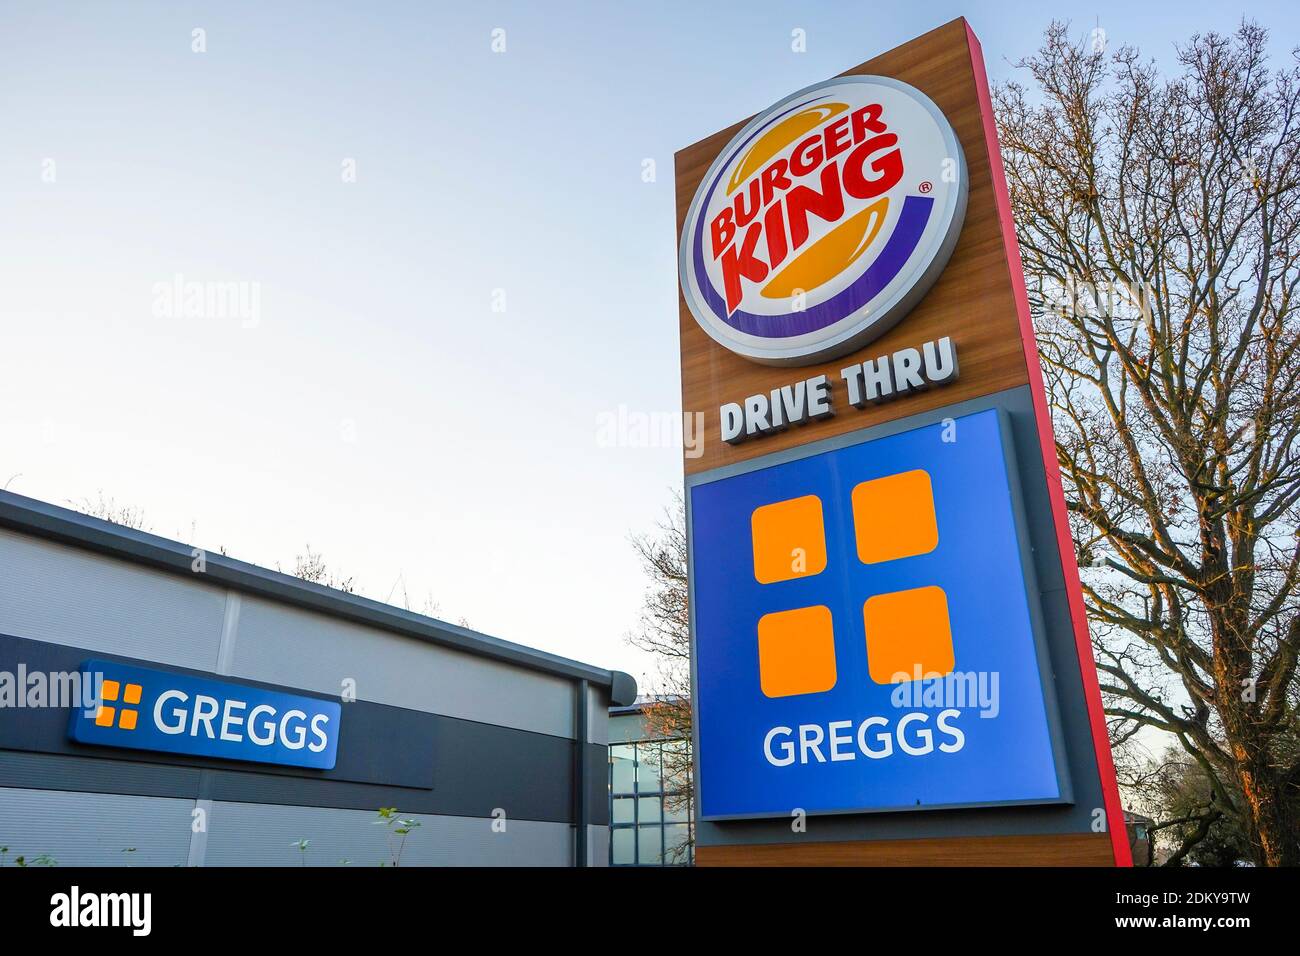 Outdoor sign of a Burger King, Greggs drive thru, UK. Stock Photo